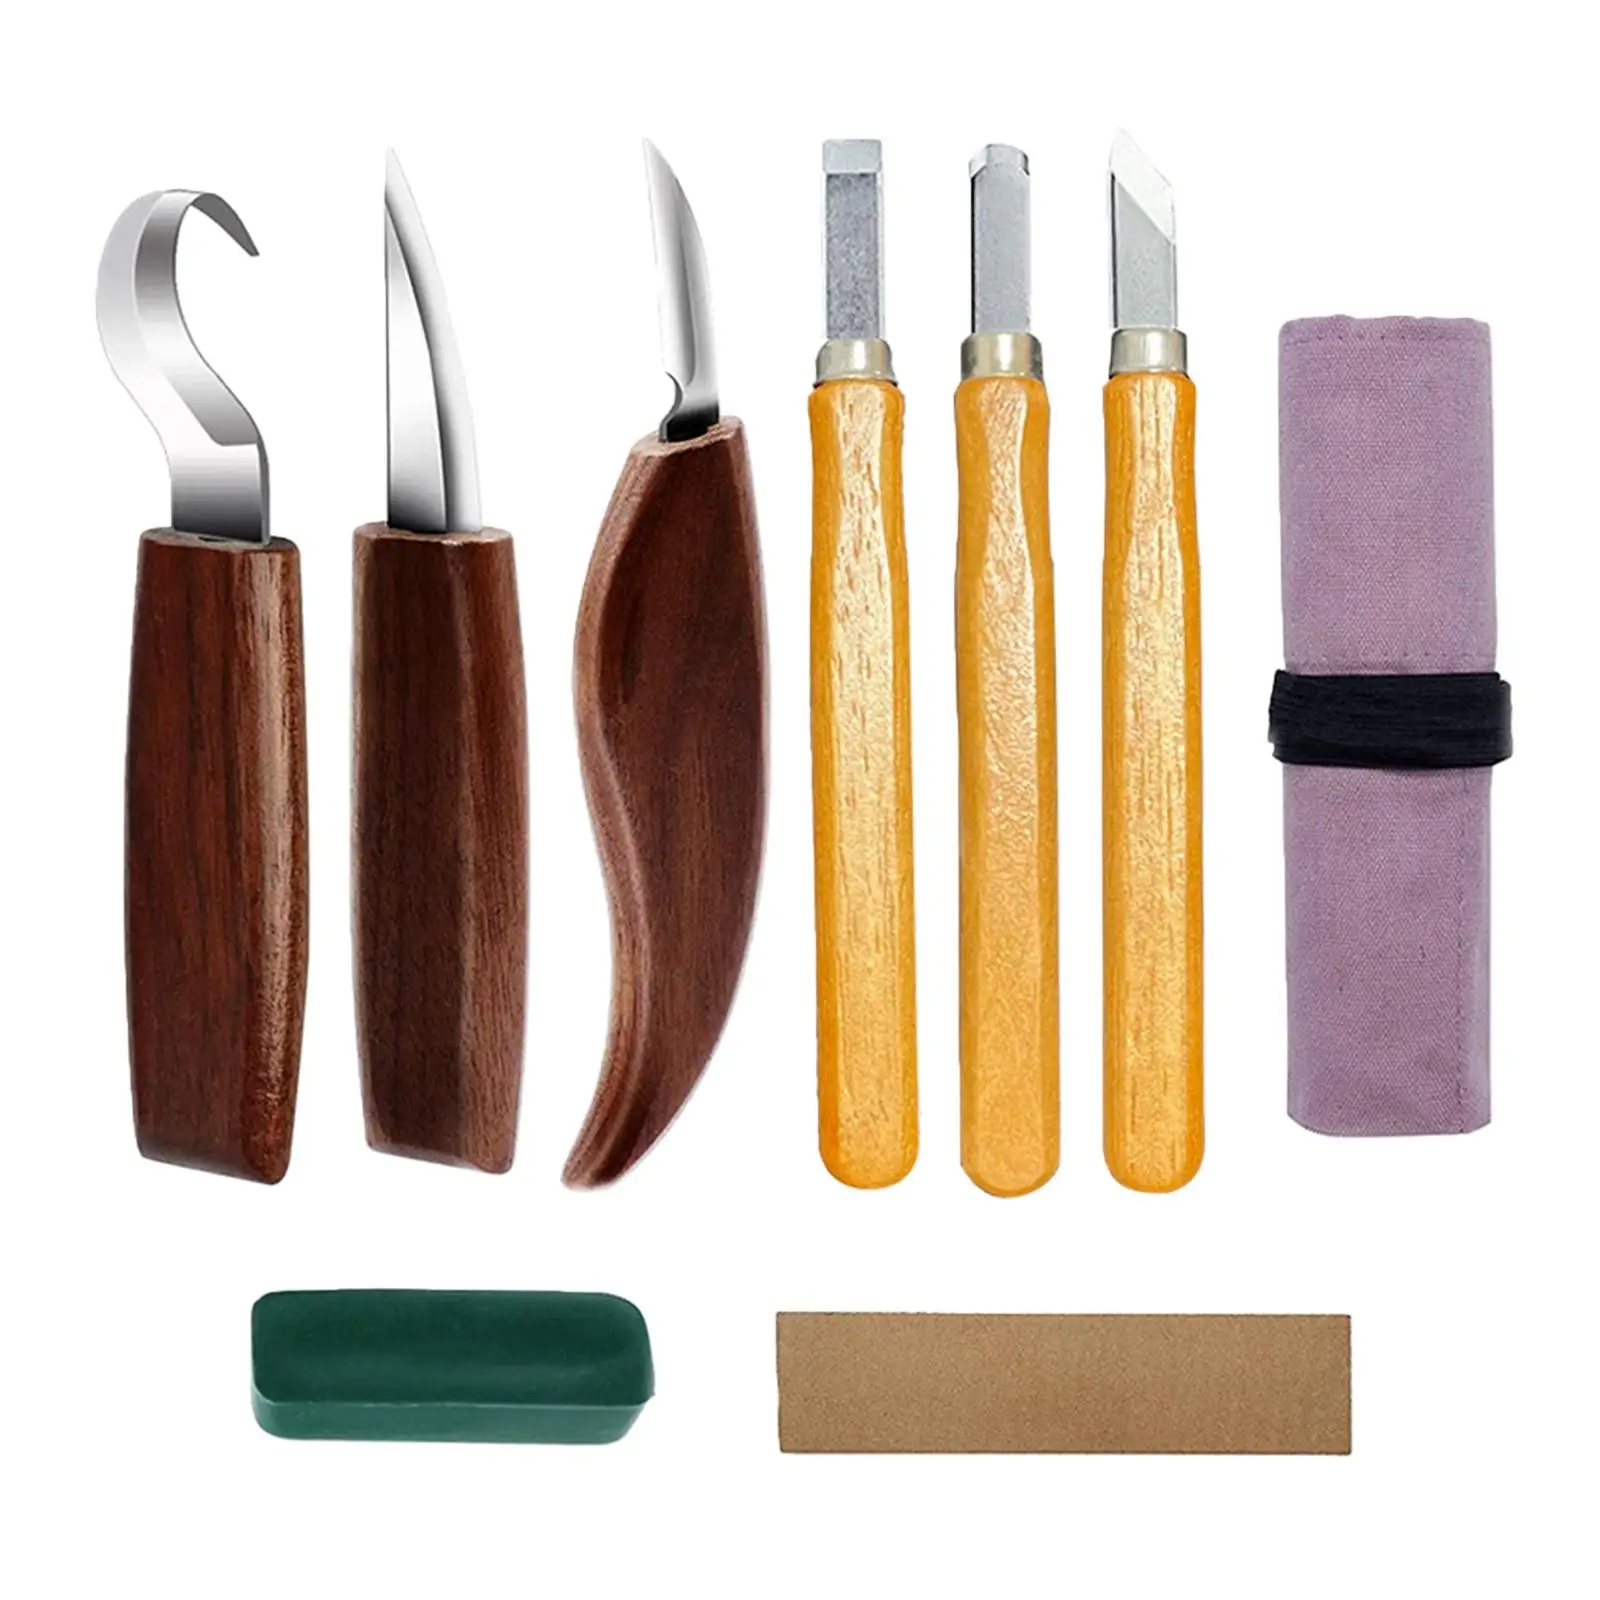 Professional Whittling Wood Carving Kit Woodworking Hook Carving Knife Carpenter Tool Detail Cutter DIY Beginners Kids Carpentry